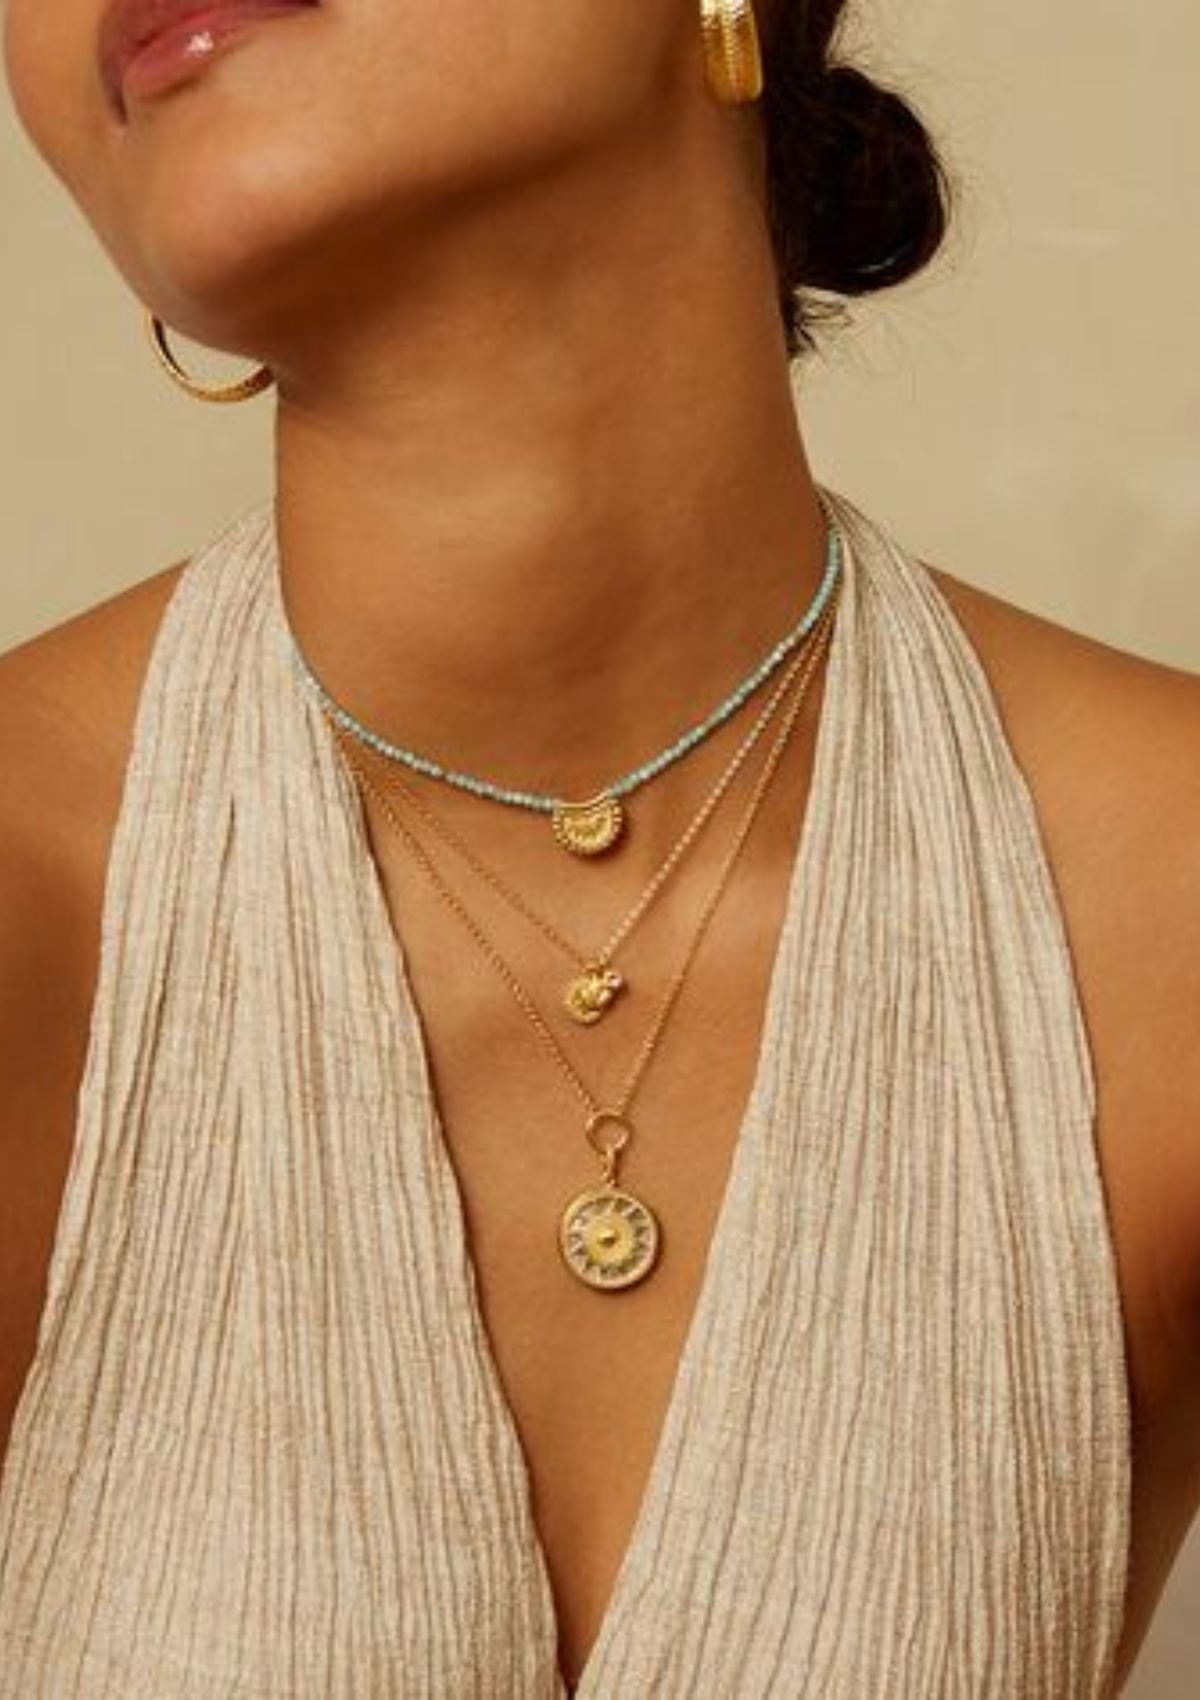 White Topaz Mandala Lotus Charm Necklace, 16" -Satya Jewelry- Ruby Jane-